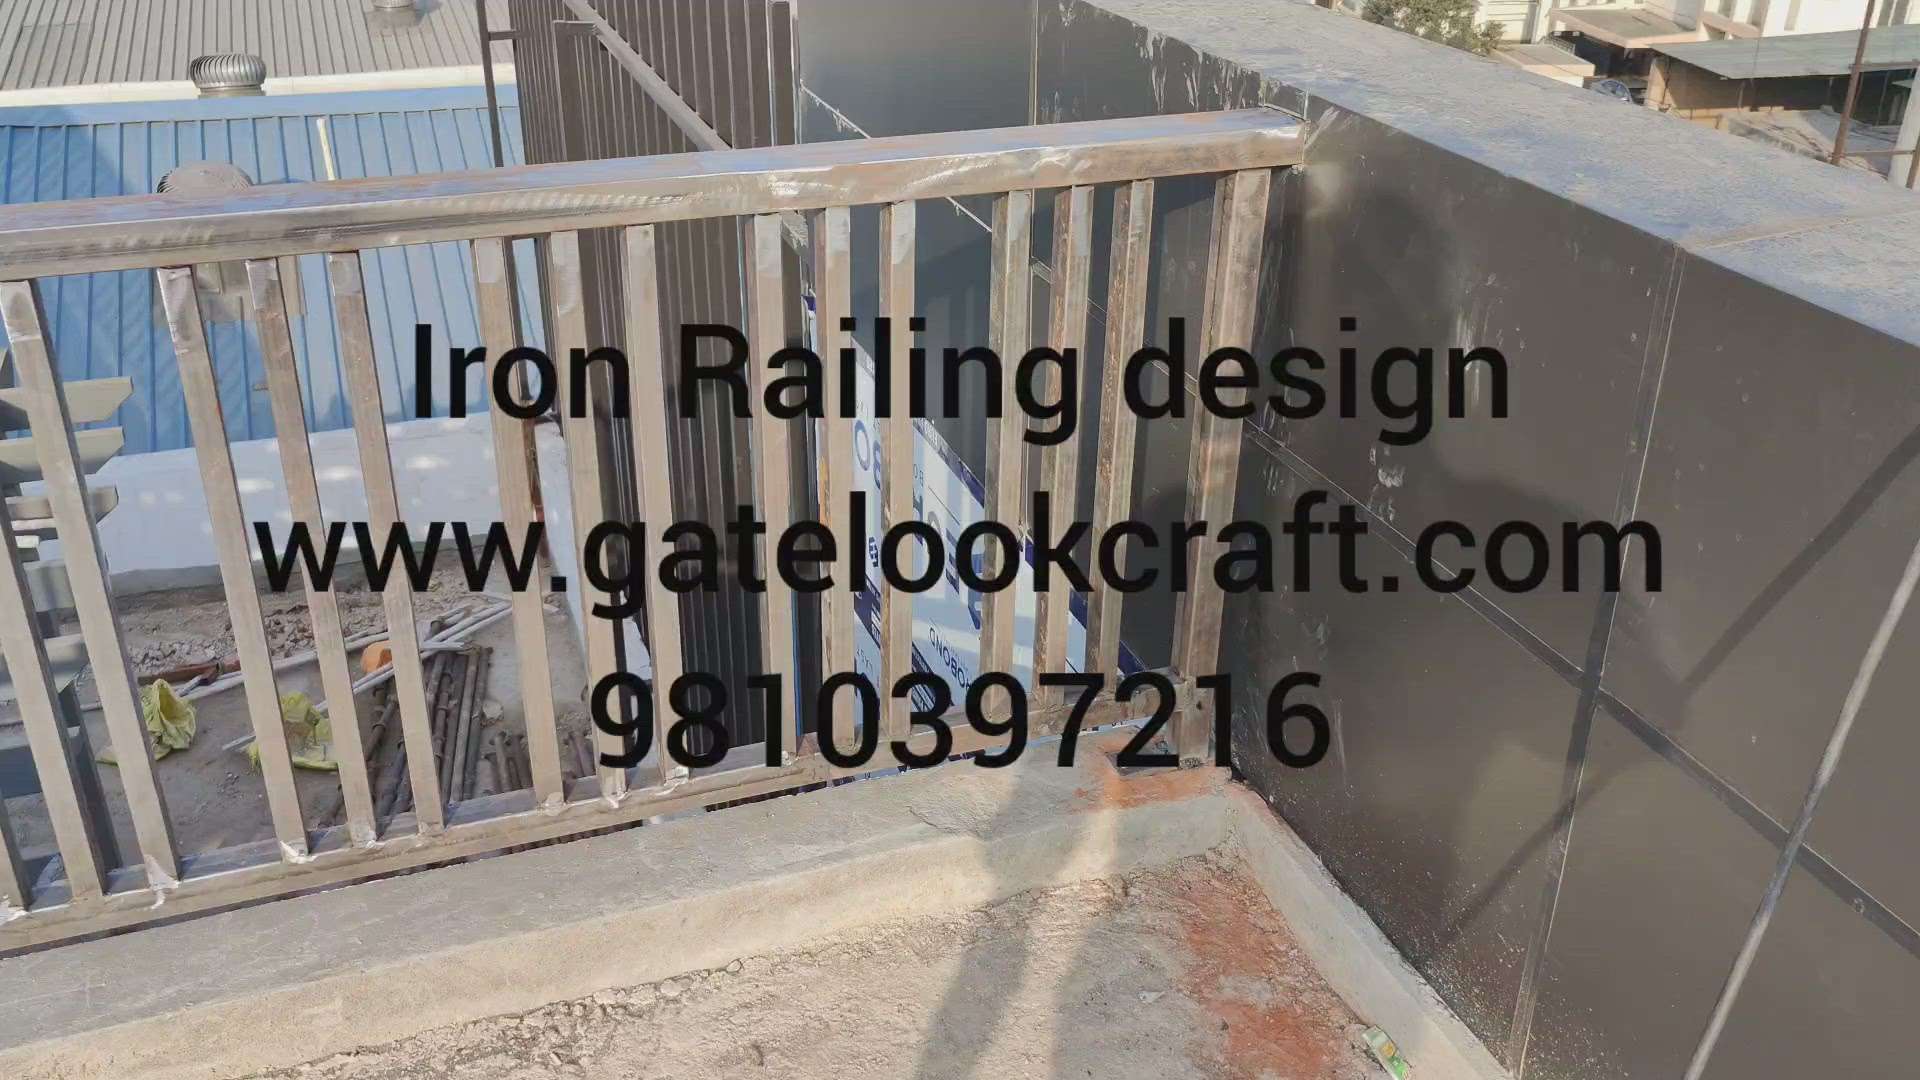 Iron Railing design by Hibza sterling interiors pvt ltd #gatelookcraft #ironrailing #Railingdesign #Railing #maingate #modulargate #irongate #aluminiumprofilegate #powdercoatinggates #fancygate #gateDesign